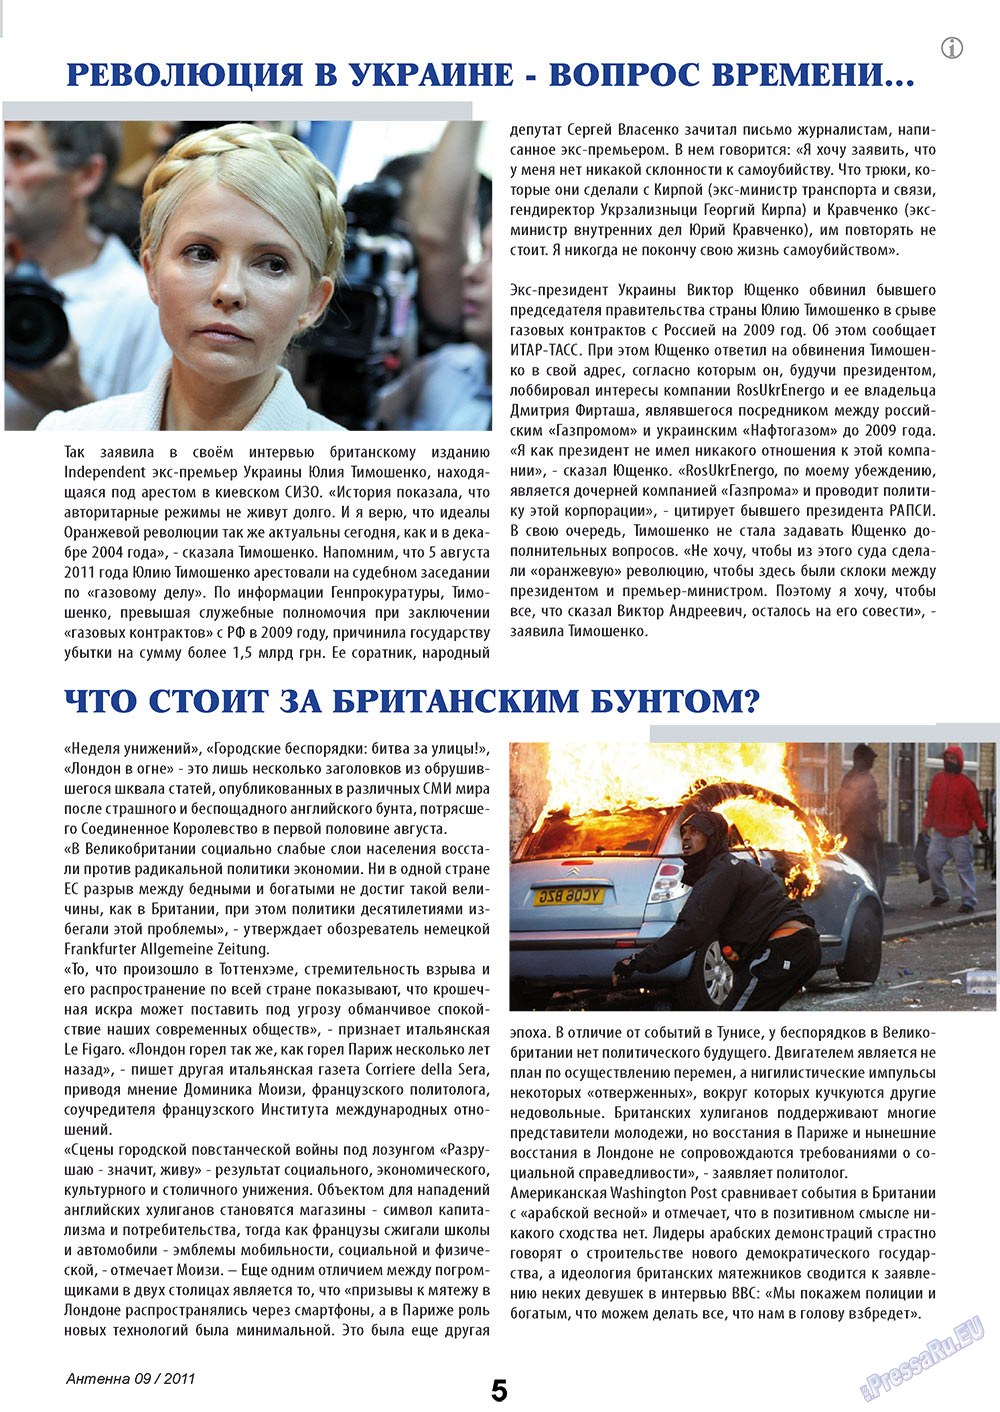 Антенна (журнал). 2011 год, номер 9, стр. 5